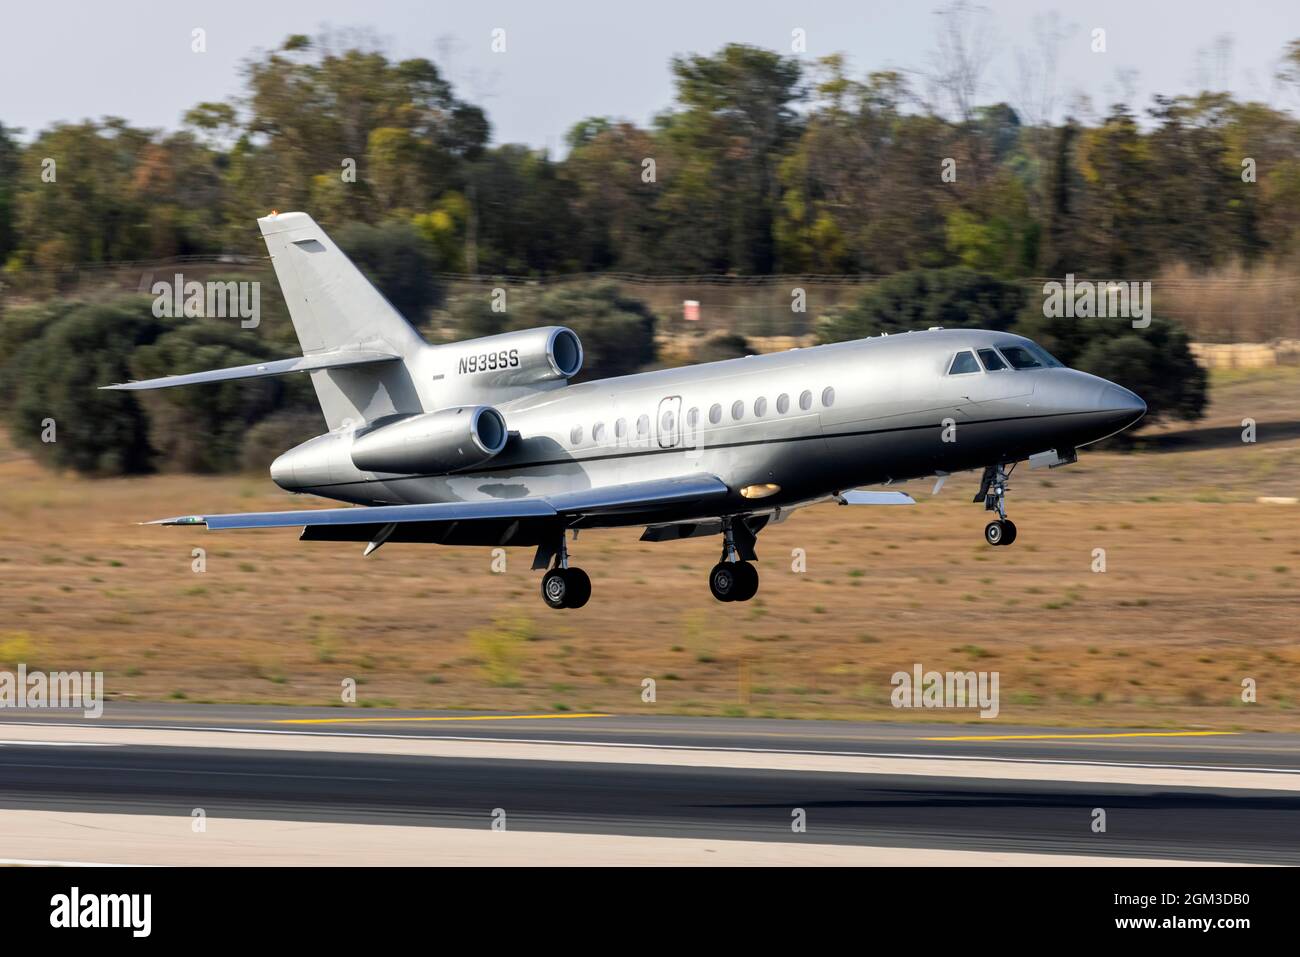 A shiny silver Dassault Falcon 900B (REG: N939SS) making a near mid-field landing. Stock Photo